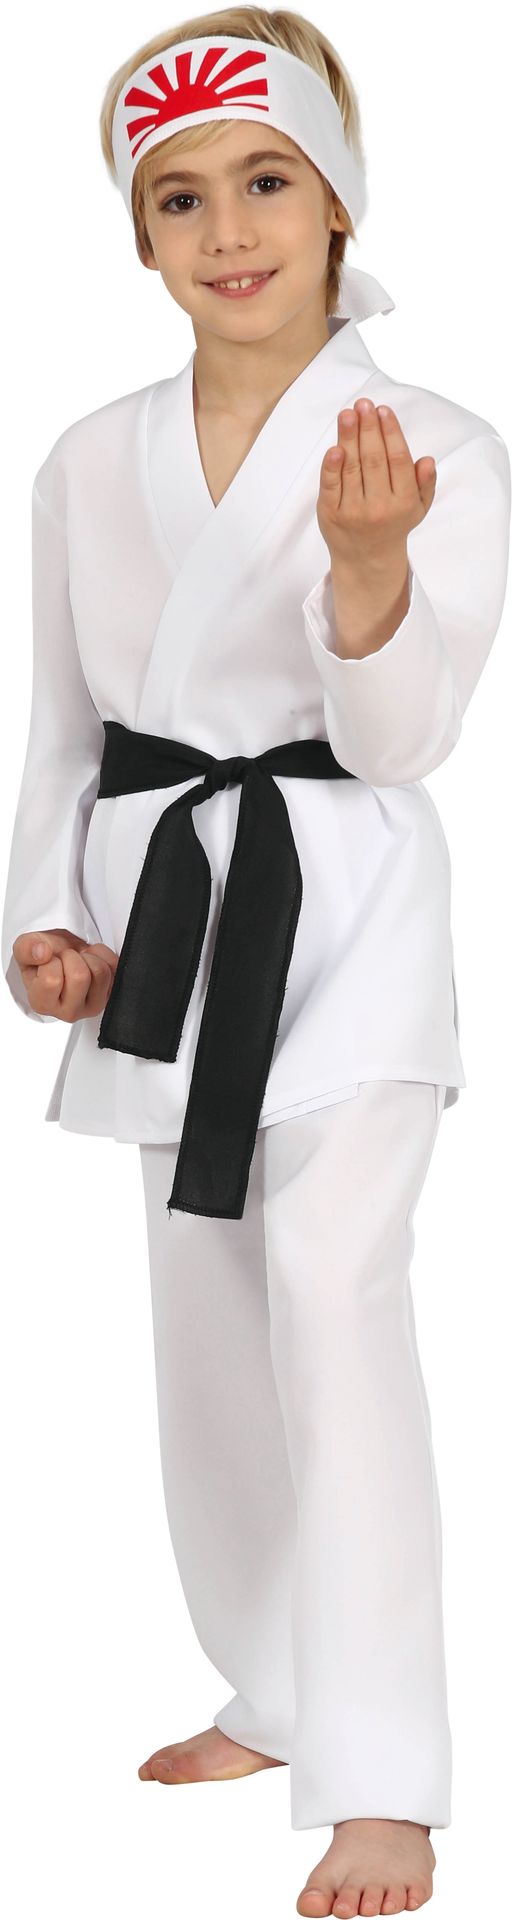 Japan karate outfit kind